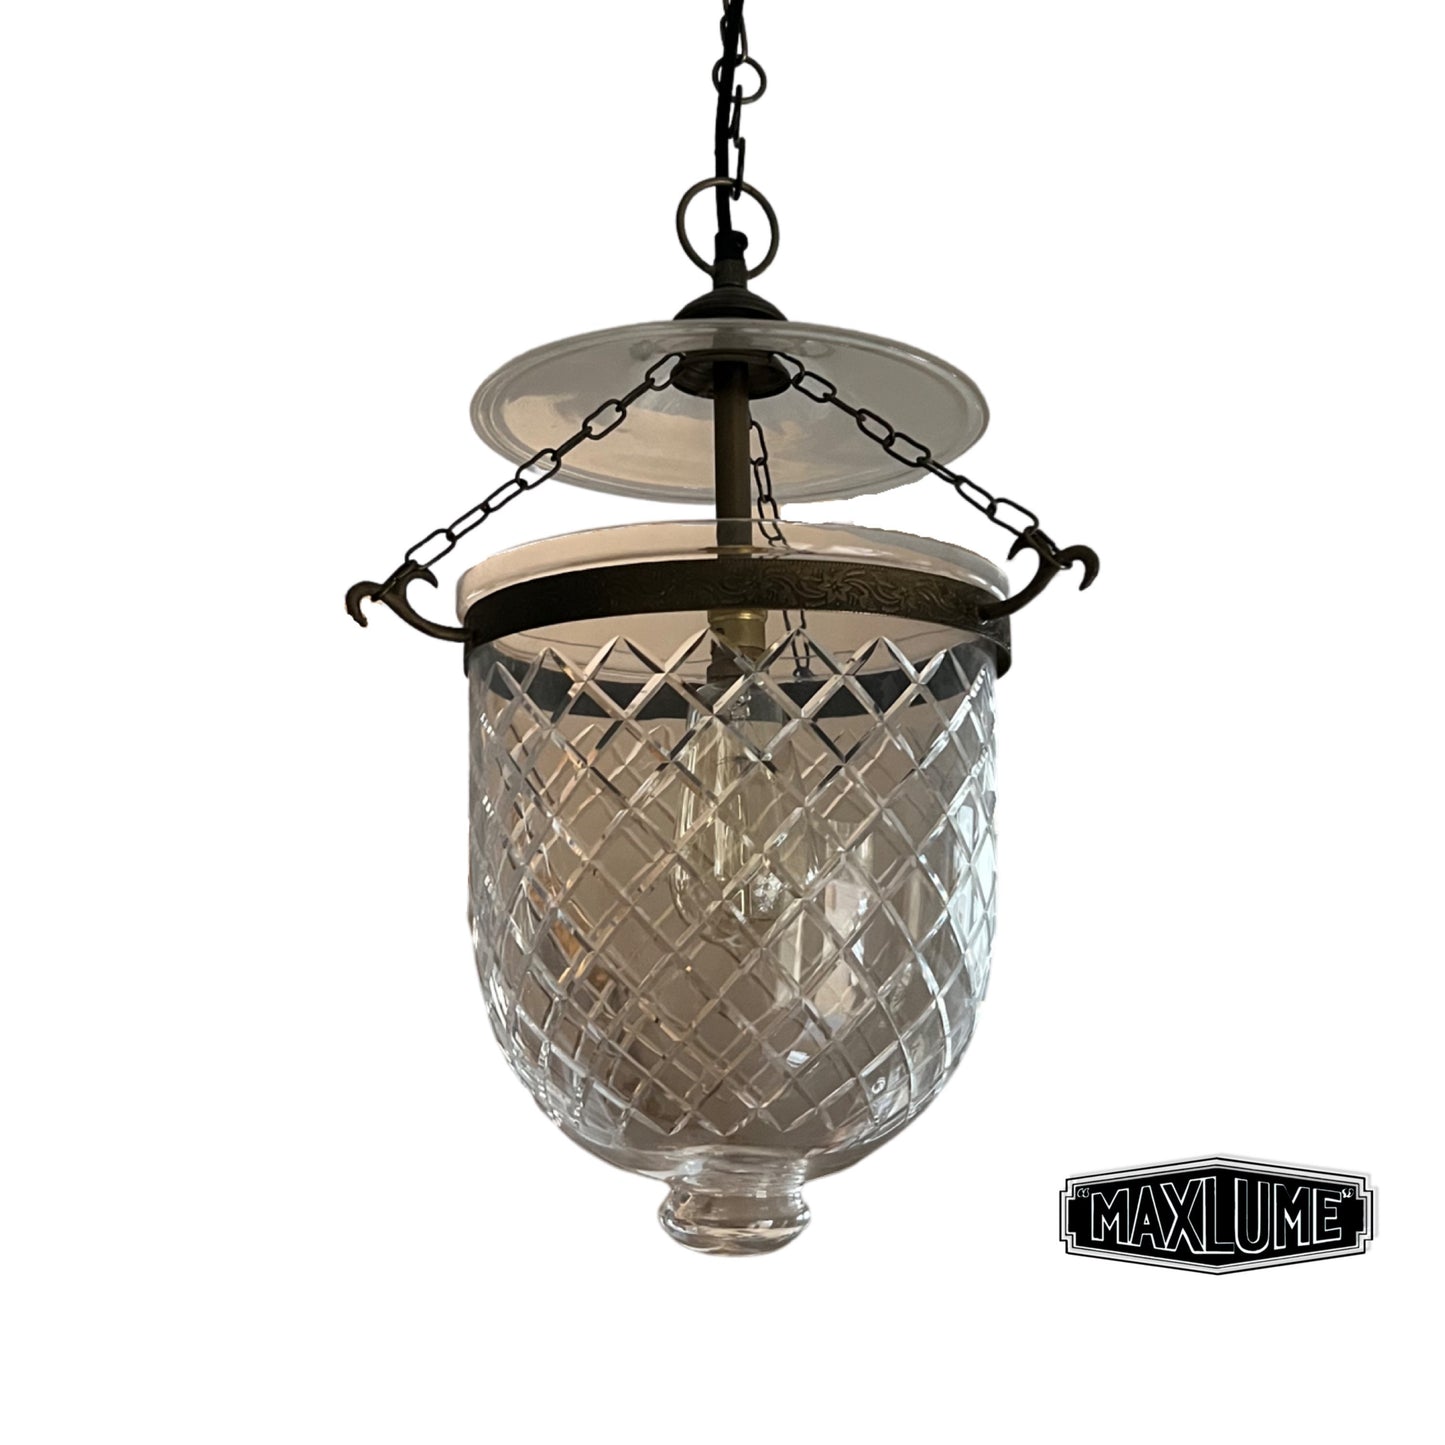 Maxlume ~ Bell Jar Glass Globe Lantern Luxury Chandelier Light ceiling dining room Antique Bronze Georgian Ceiling Pendant Bee